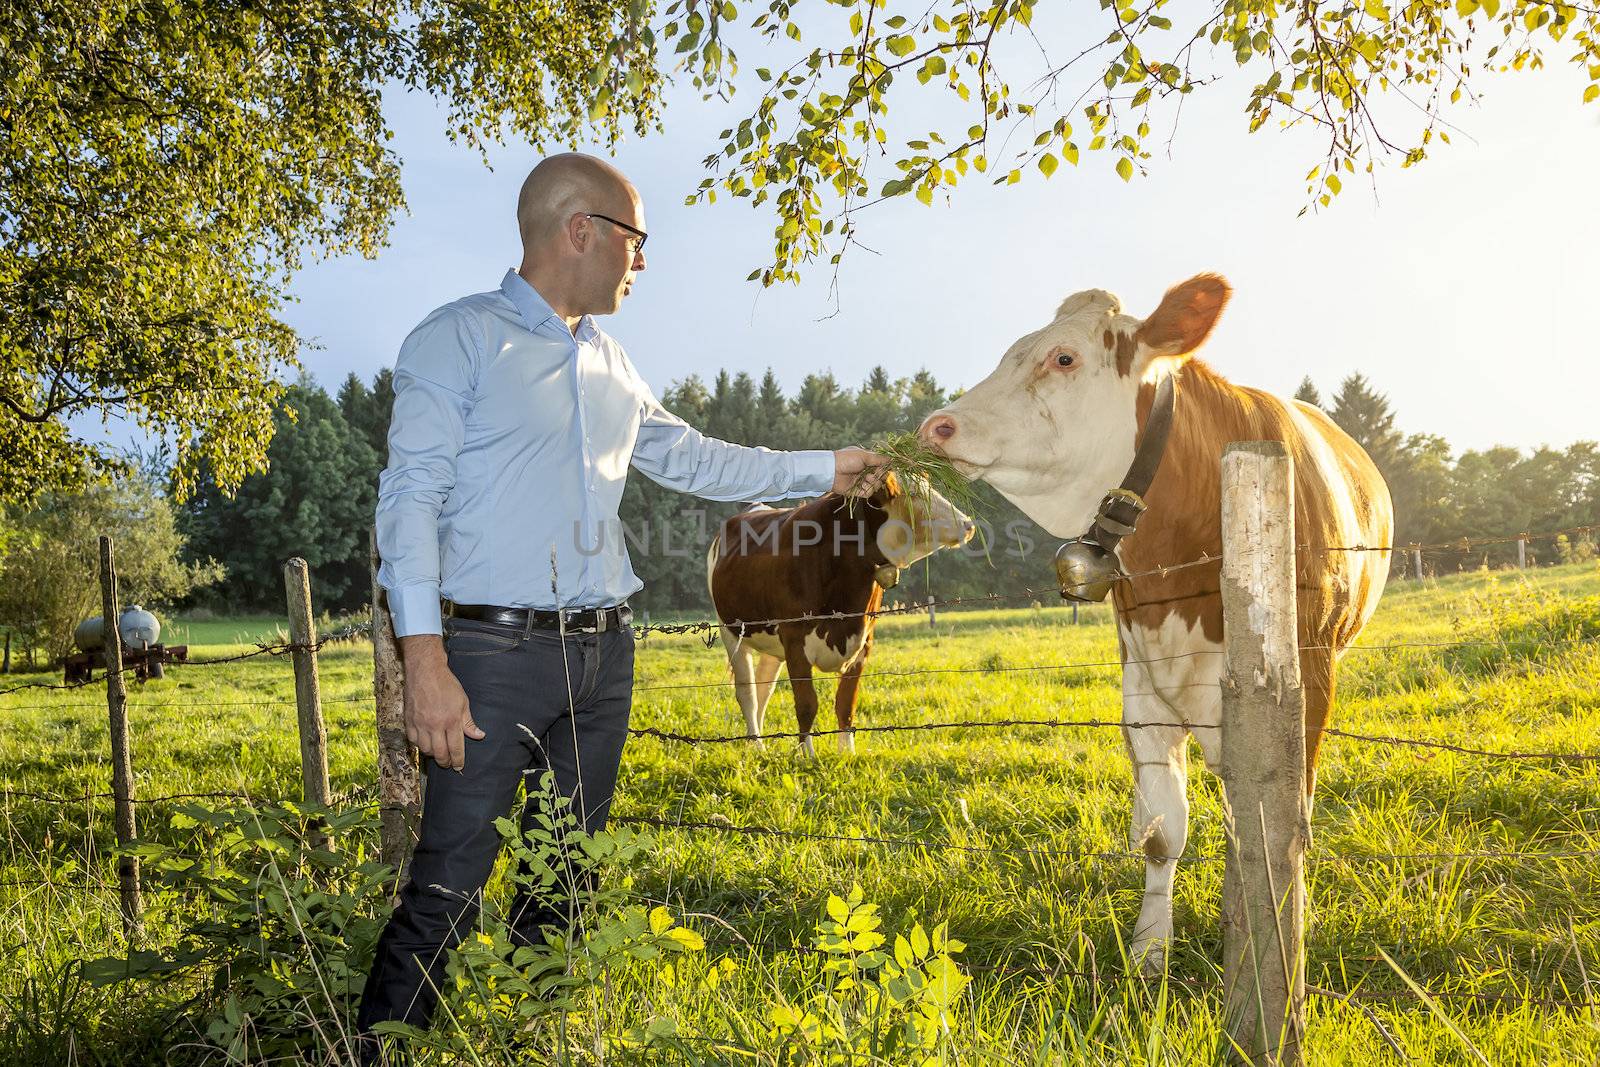 An image of a man feeding a cow